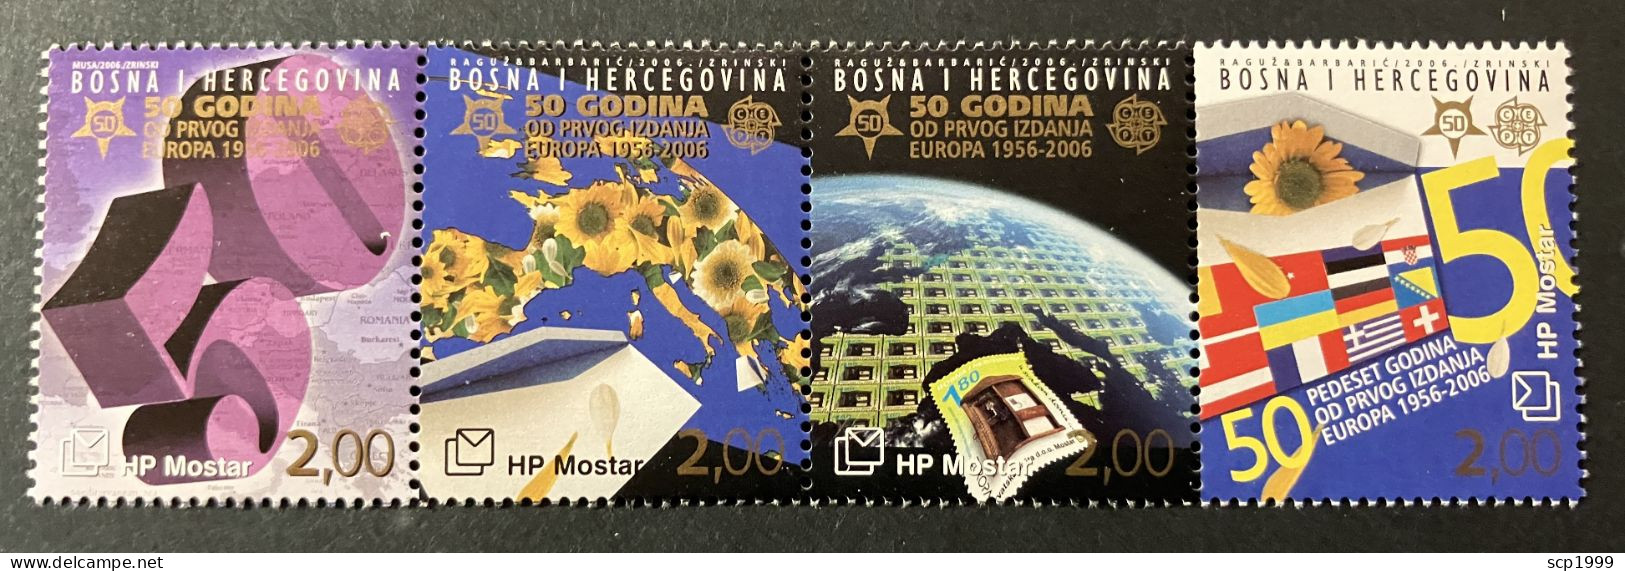 Bosnia And Herzegovina 2006 - Europa 50 Years Stamps Set MNH - Bosnie-Herzegovine